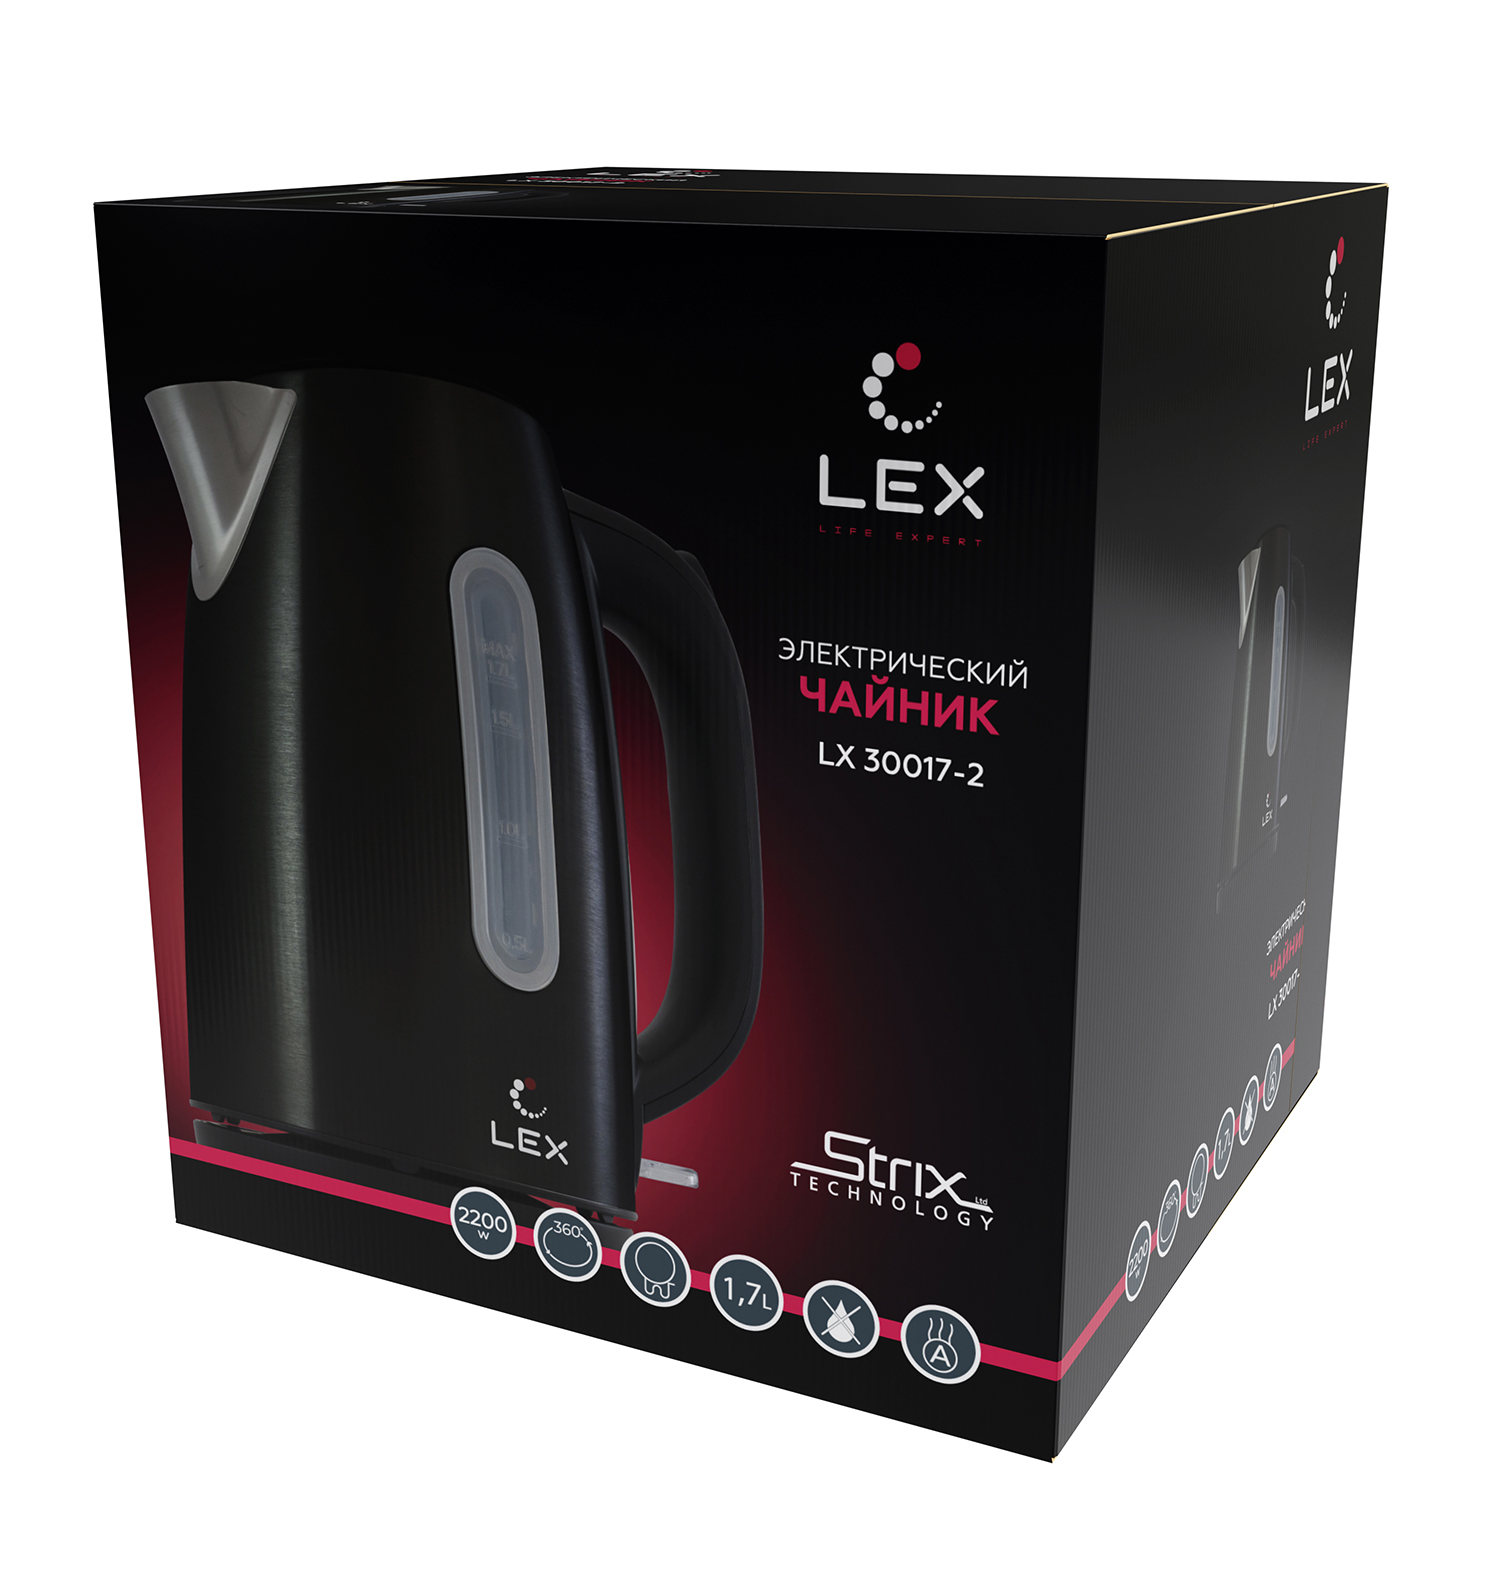 LEX LX 30017-2